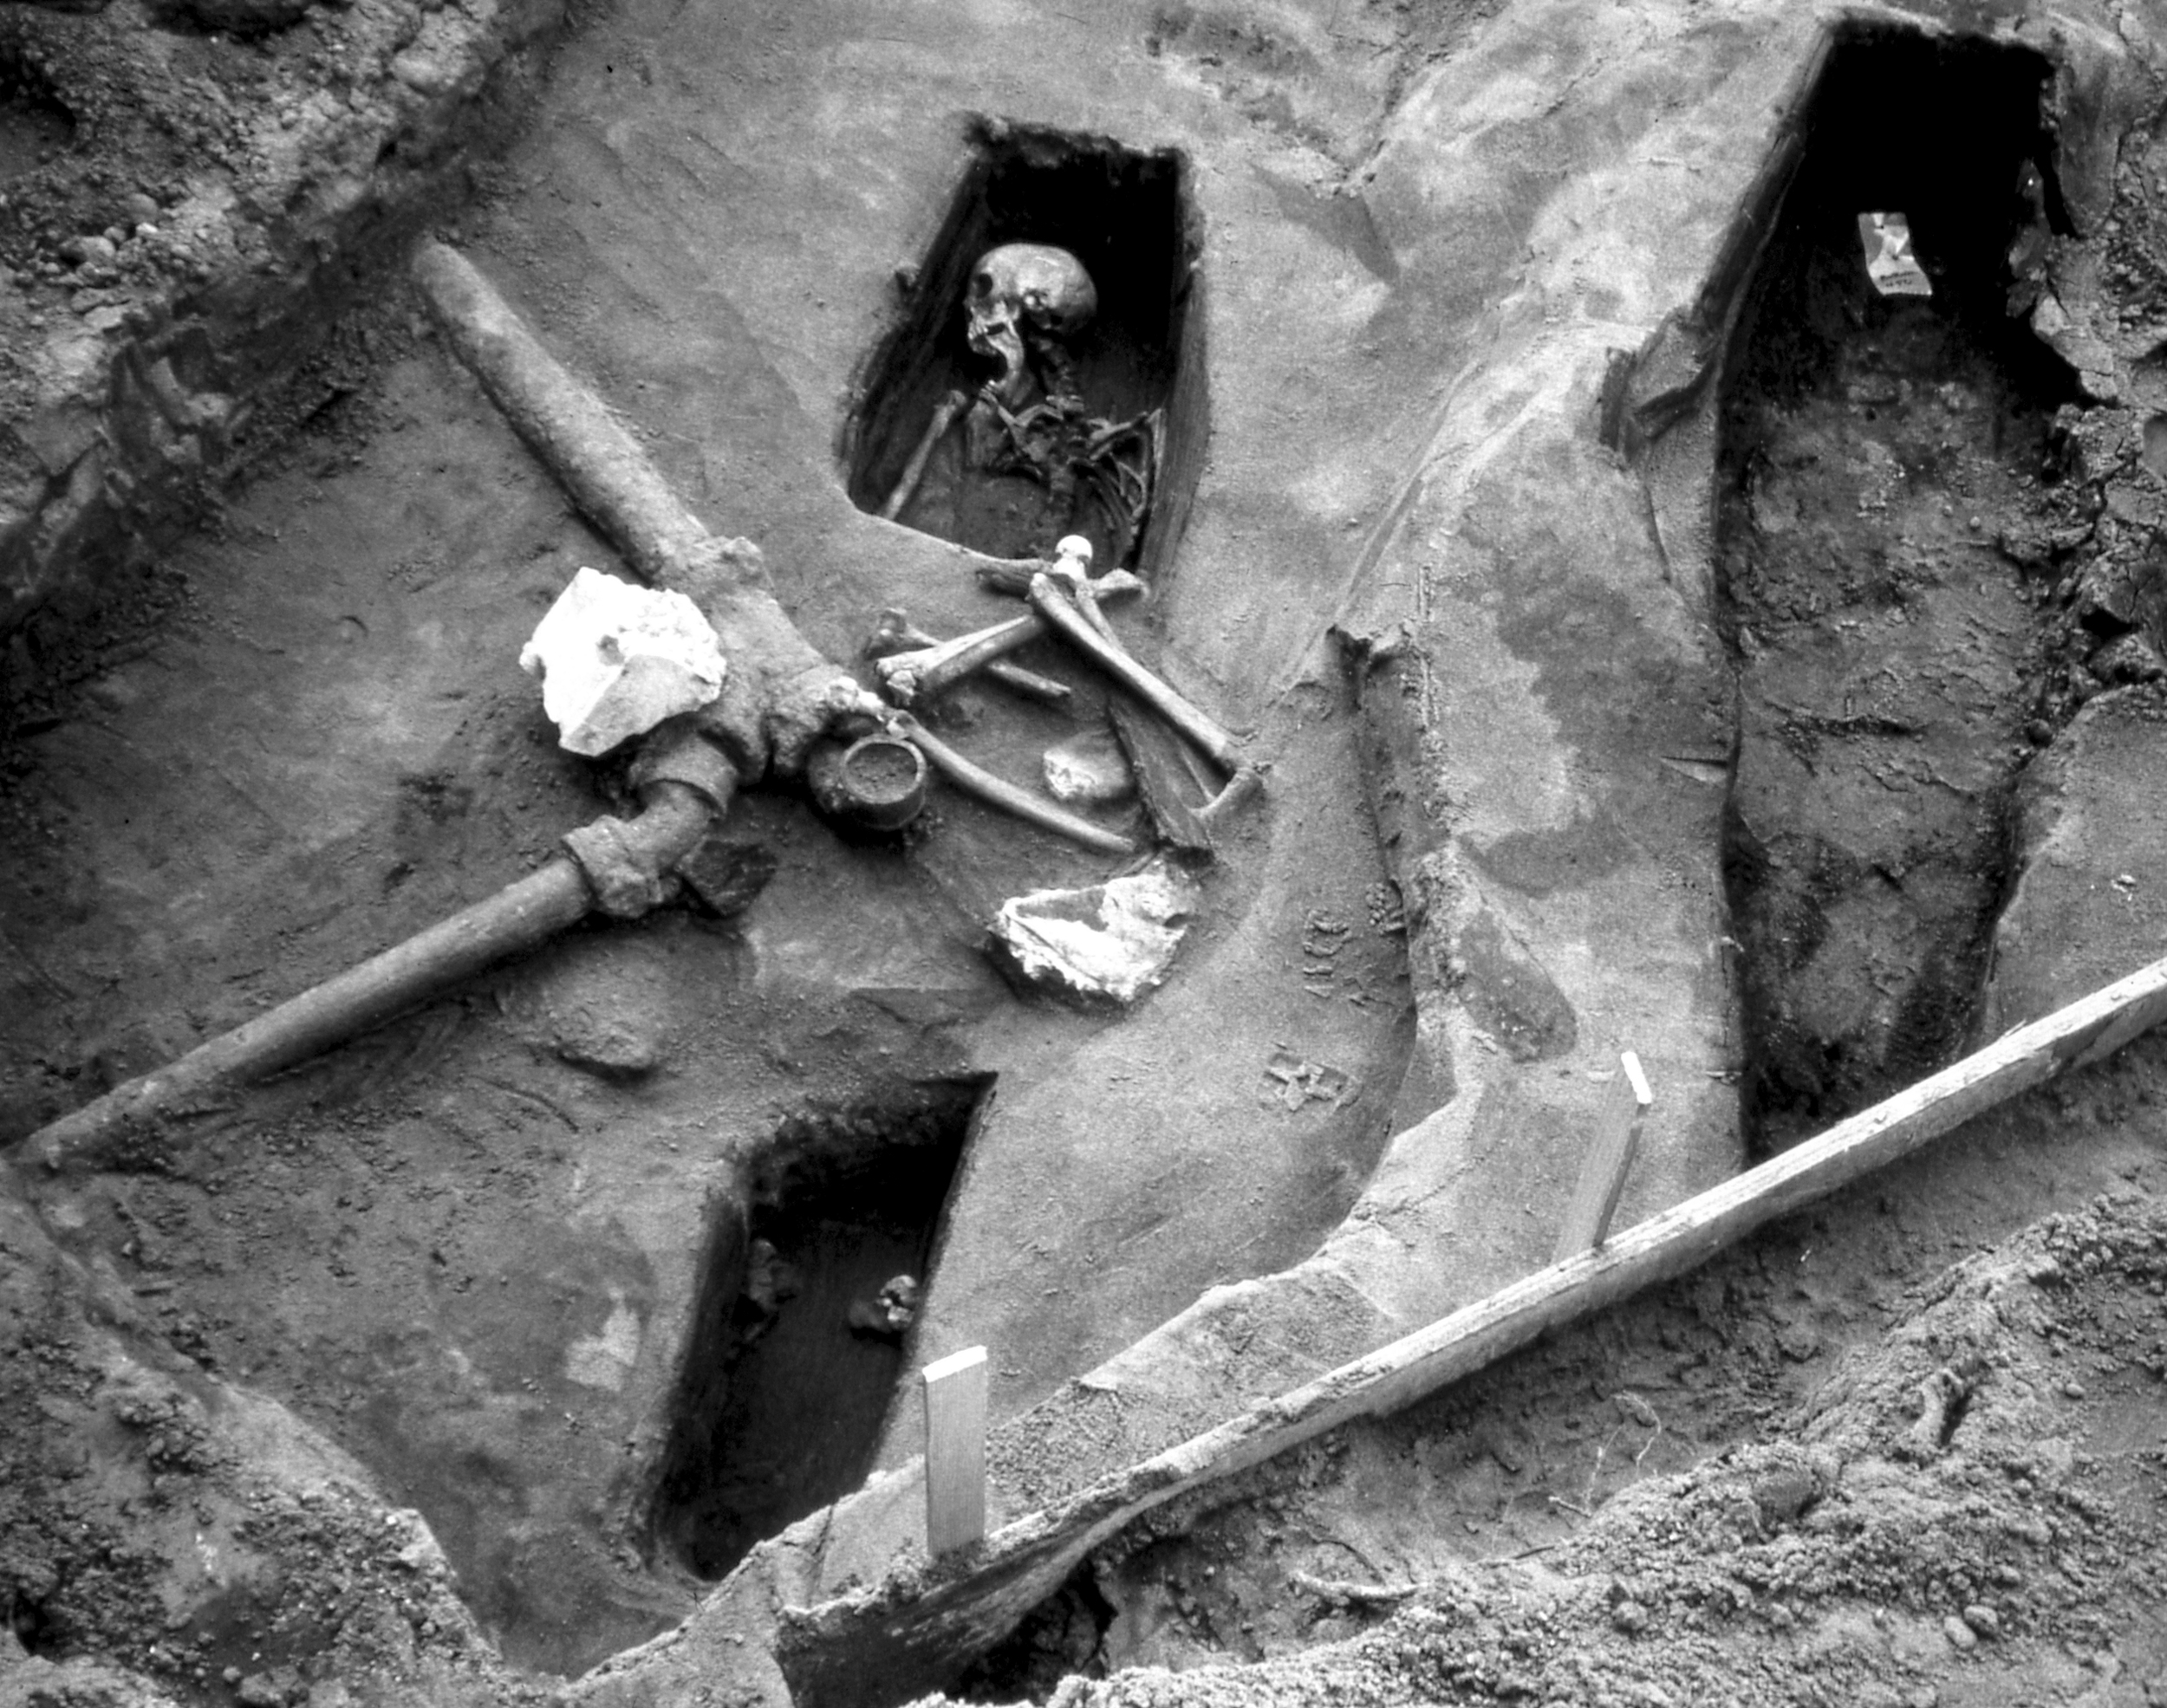  Burial With Plumbing, 1994 